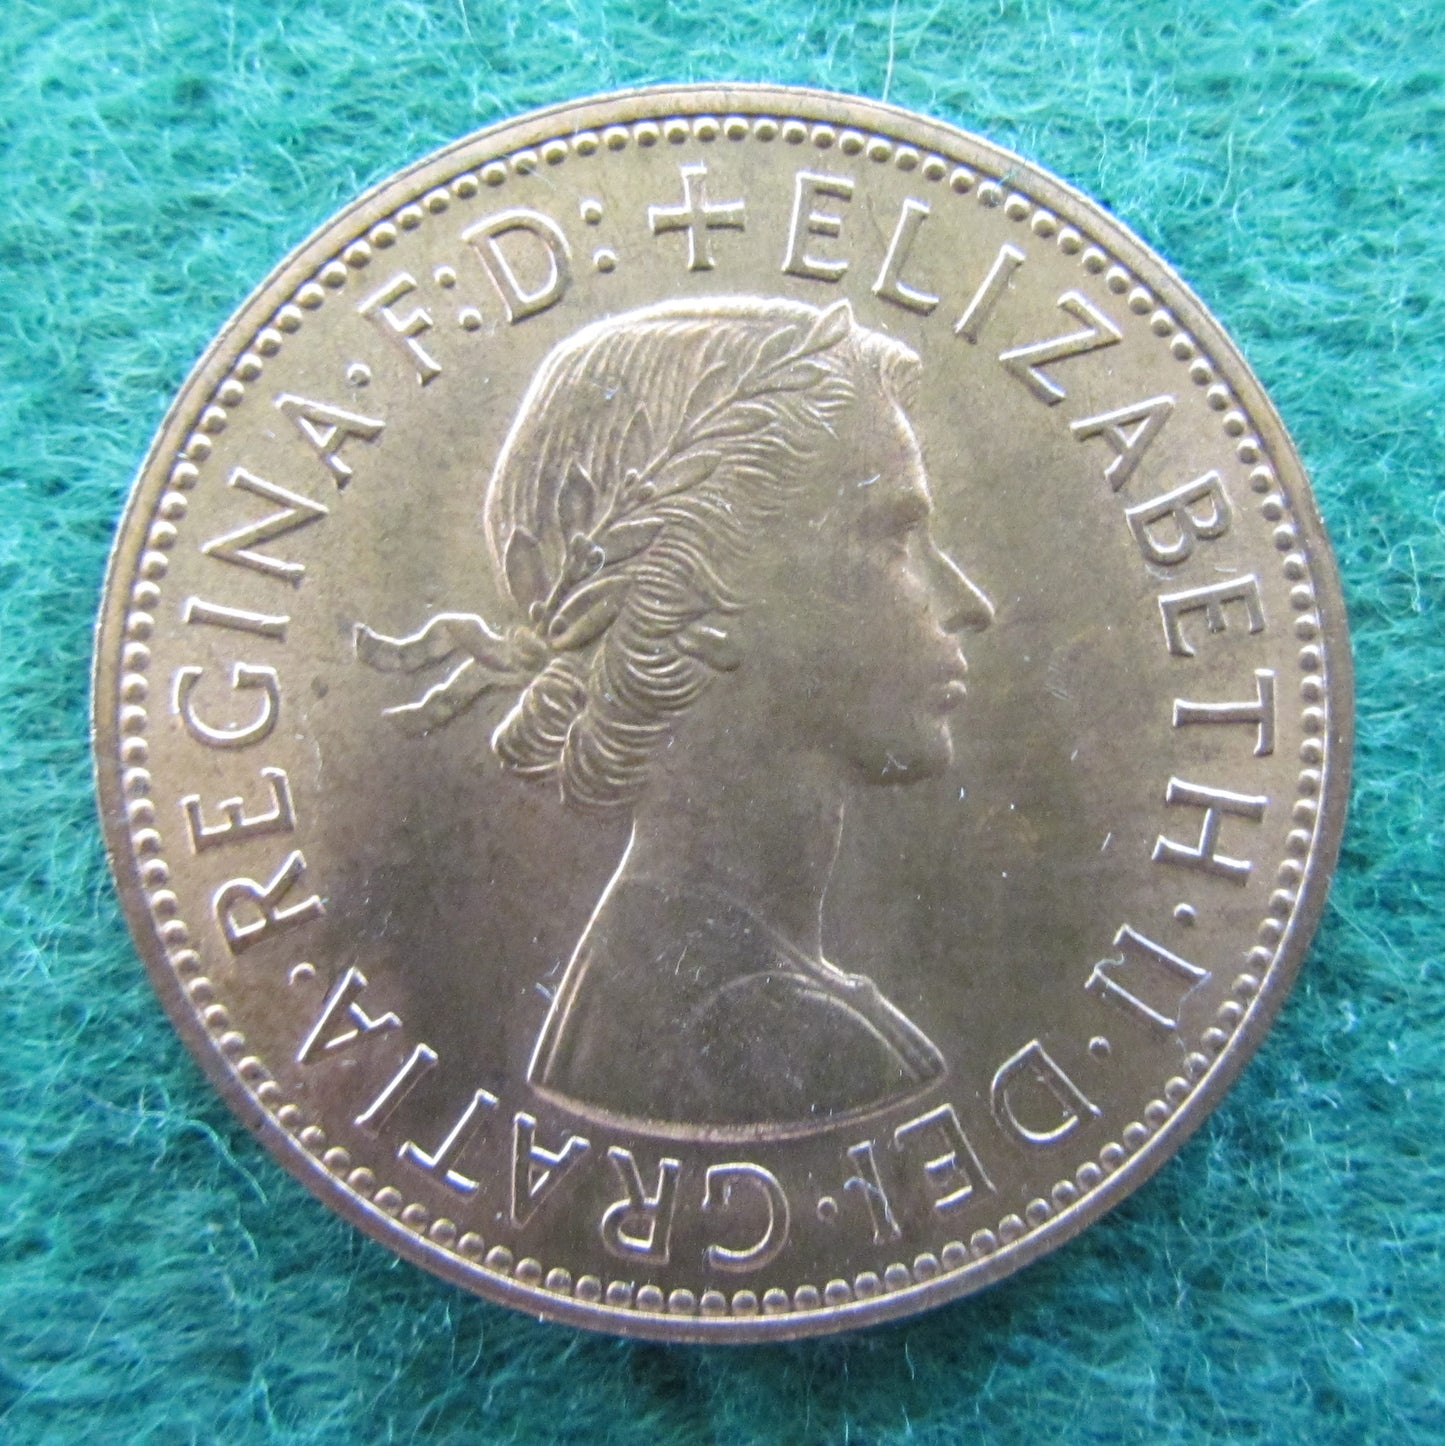 GB British UK English 1965 Penny Queen Elizabeth II Coin